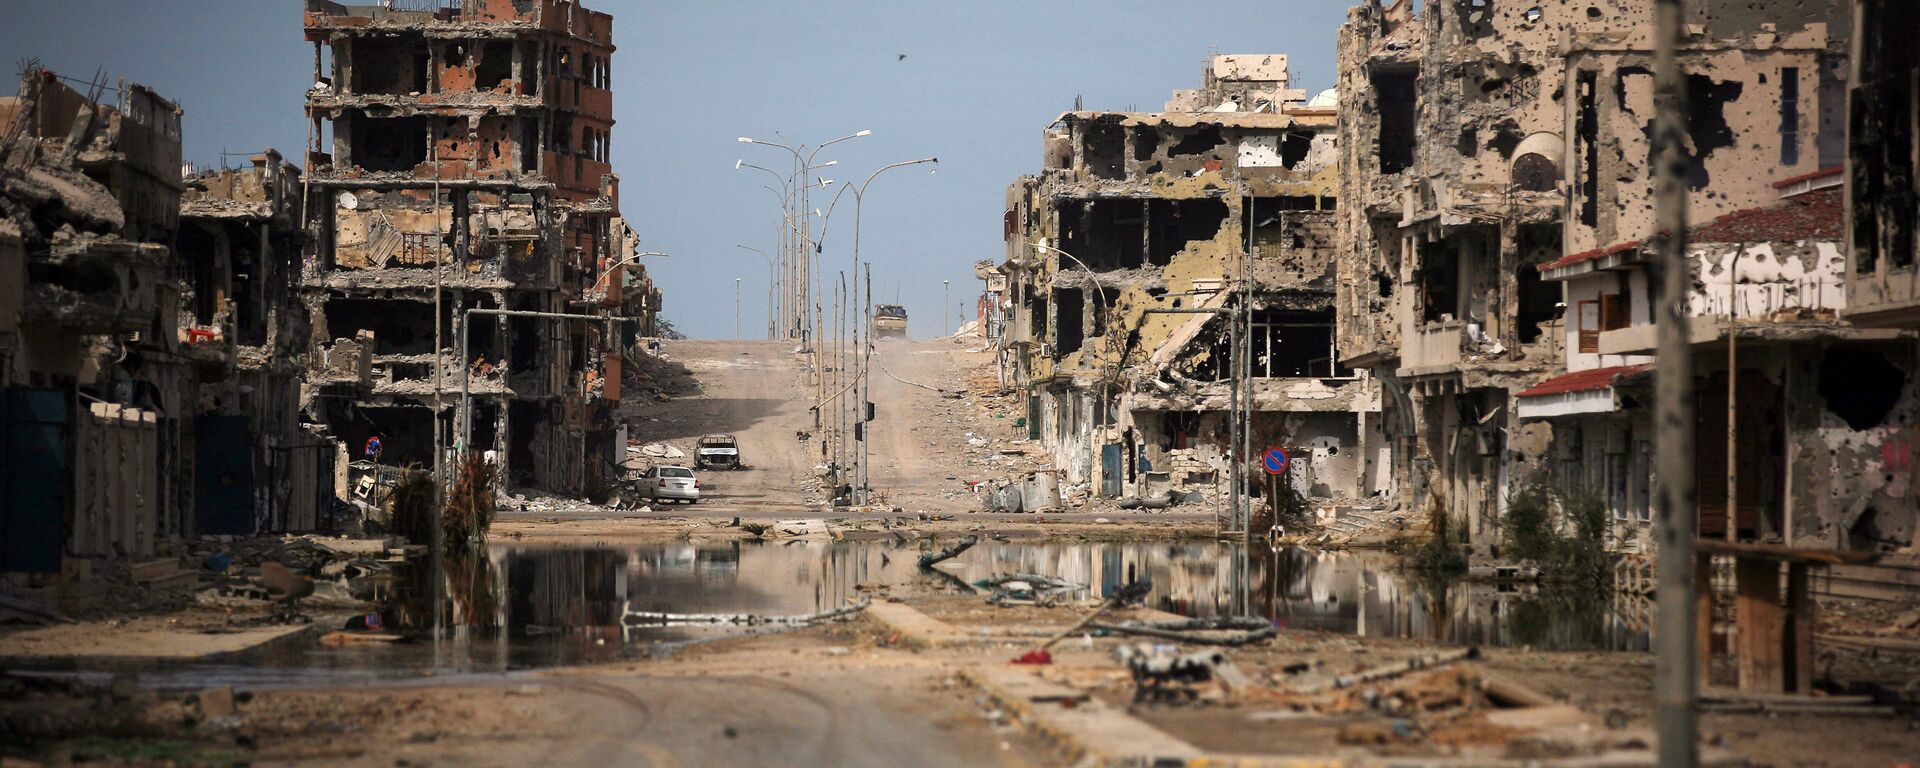 Las ruinas en la ciudad libia de Sirte - Sputnik Mundo, 1920, 23.06.2021